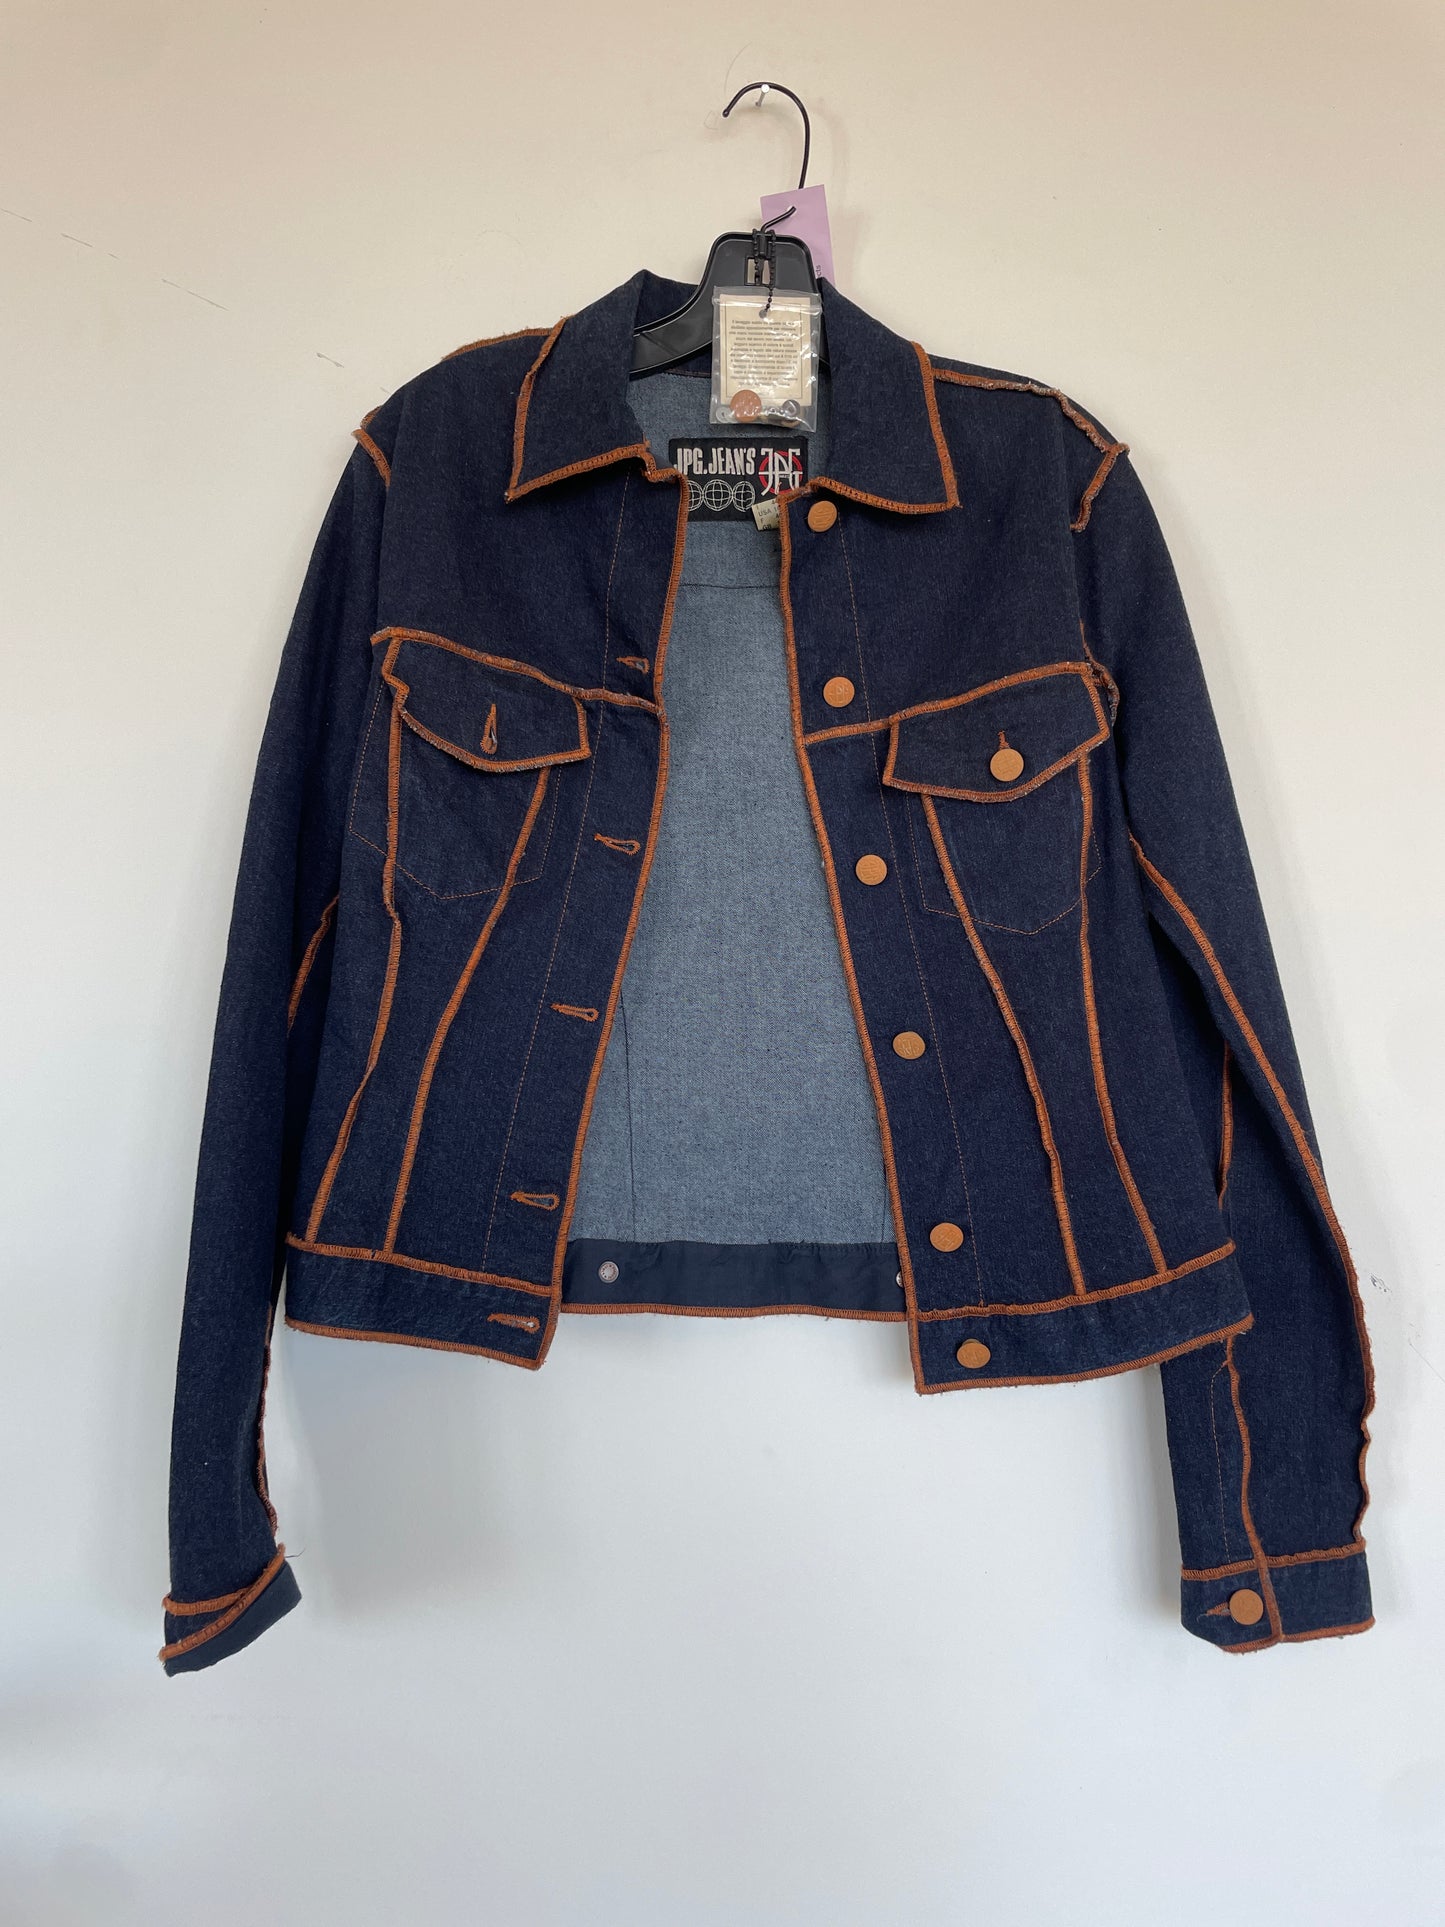 Jean Paul Gaultier Jeans 90's denim jacket with visible orange seams